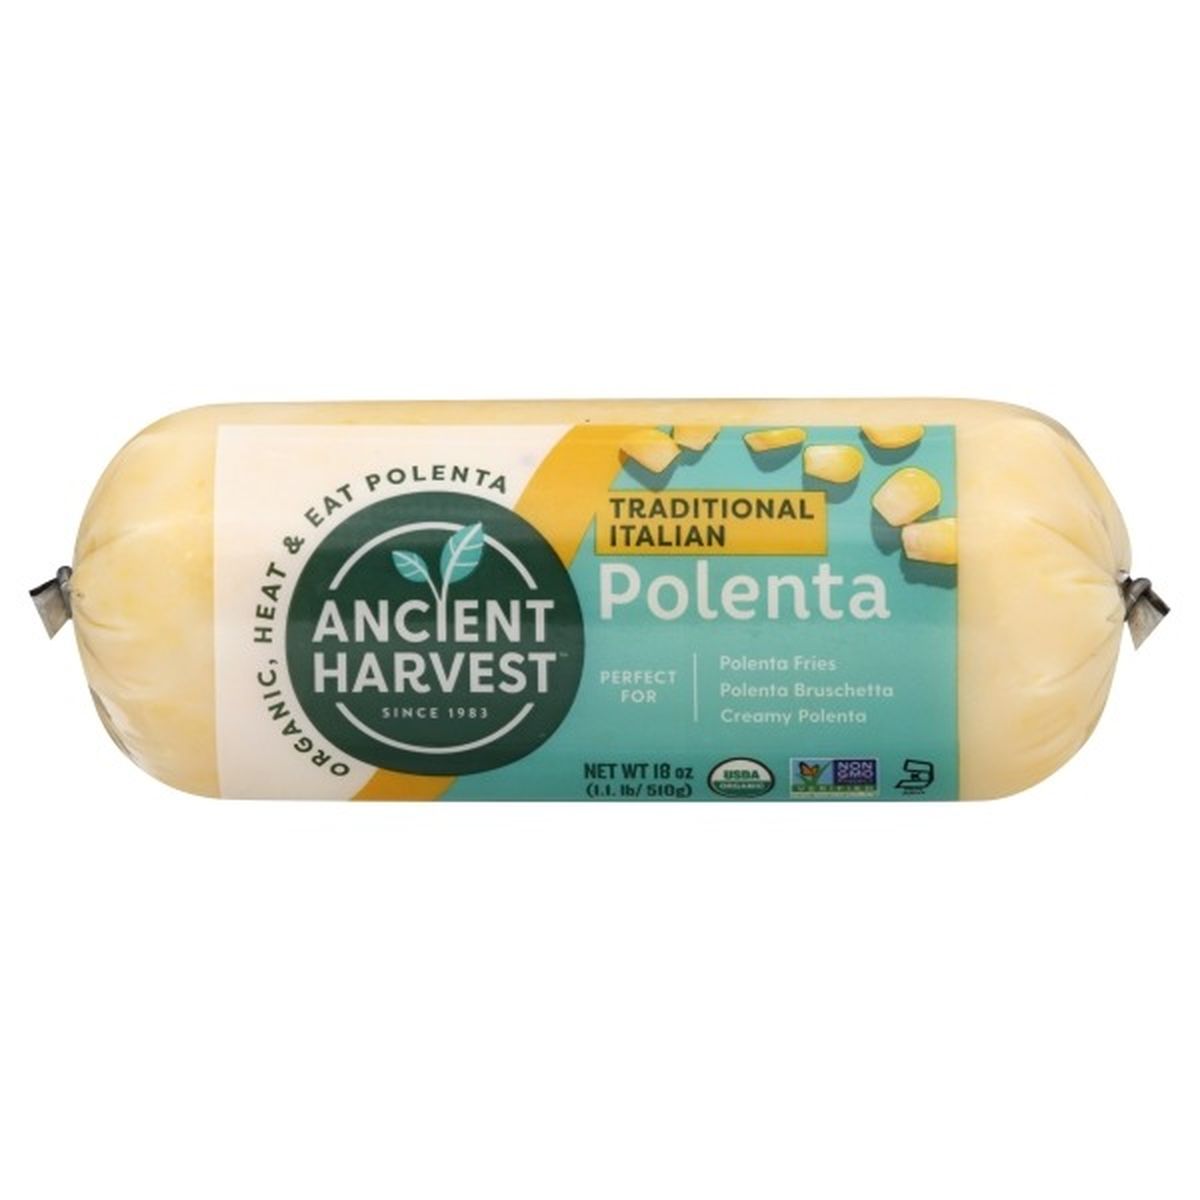 Calories in Ancient Harvest Food Merchants Brand Polenta, Organic, Traditional Italian